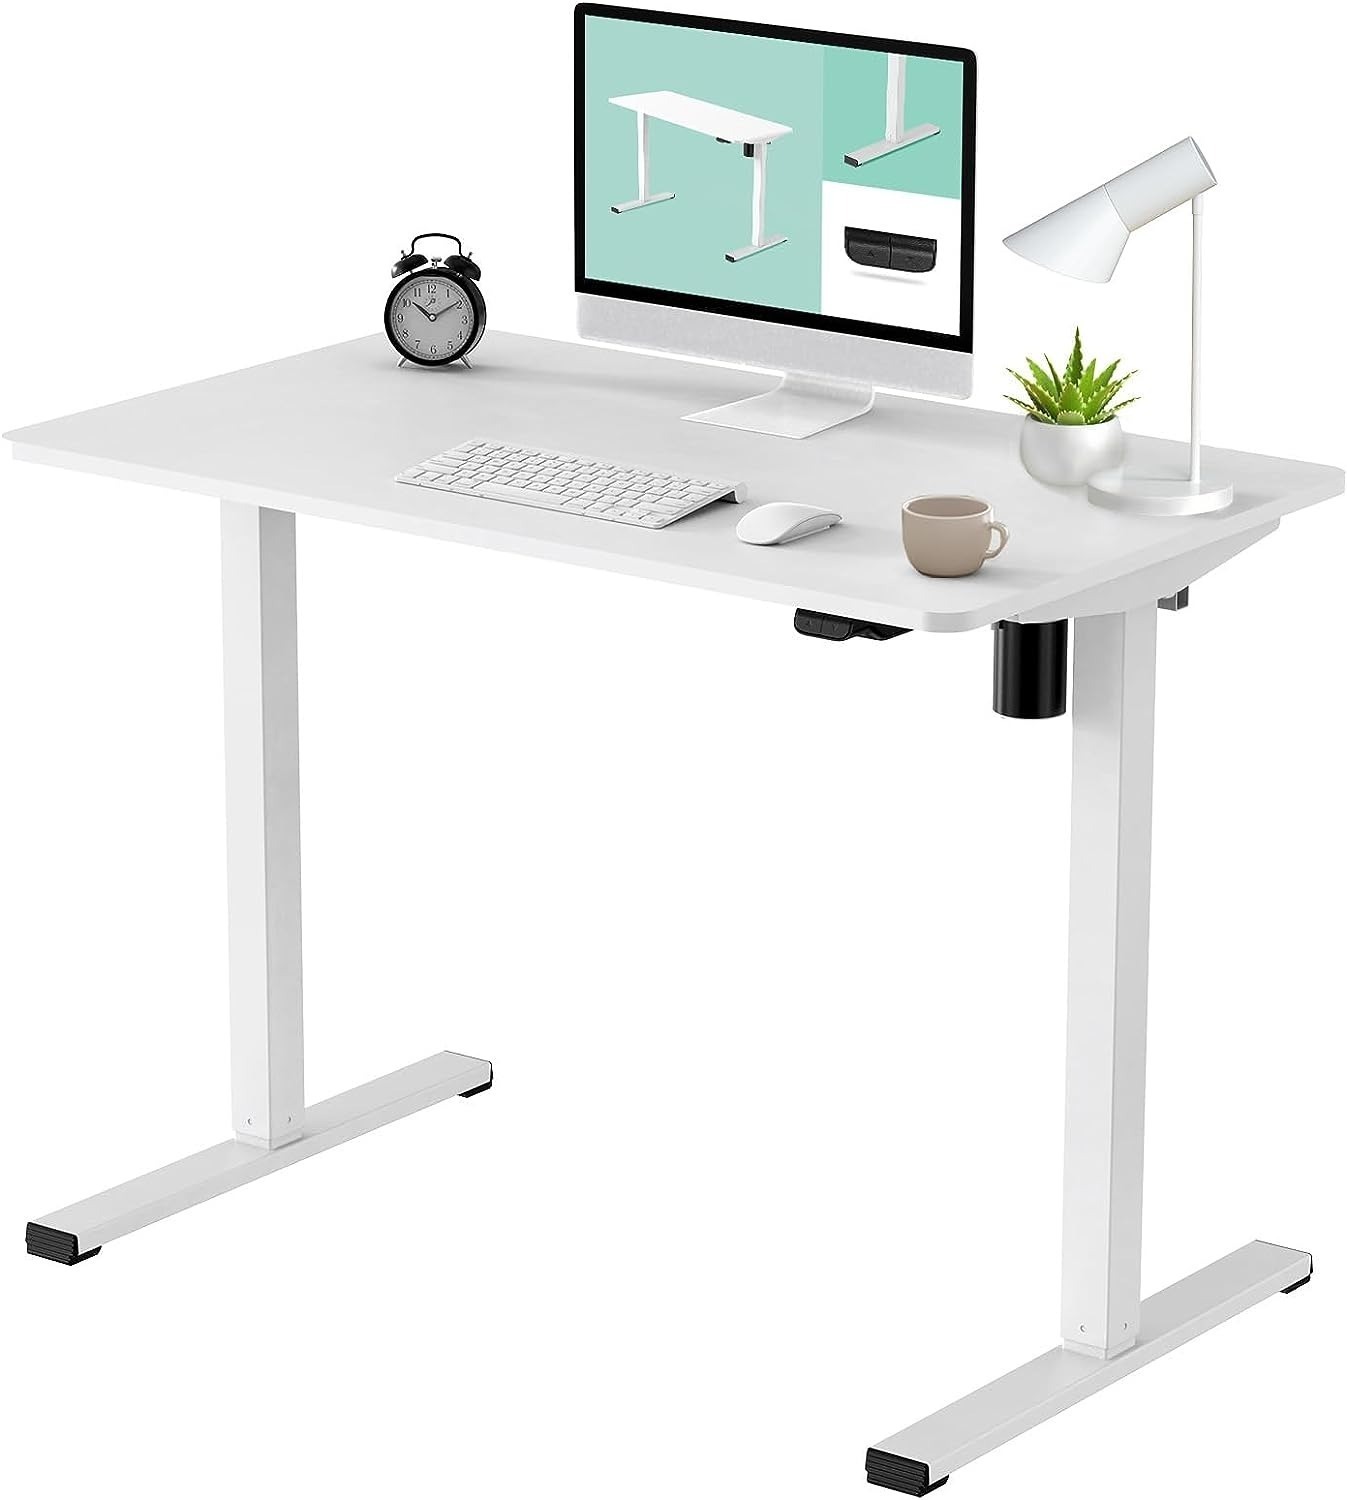 FLEXISPOT Whole-Piece Desk Board Electric Standing Desk (40" x 24", White Frame+White Top) $109.60 & More + Free Shipping